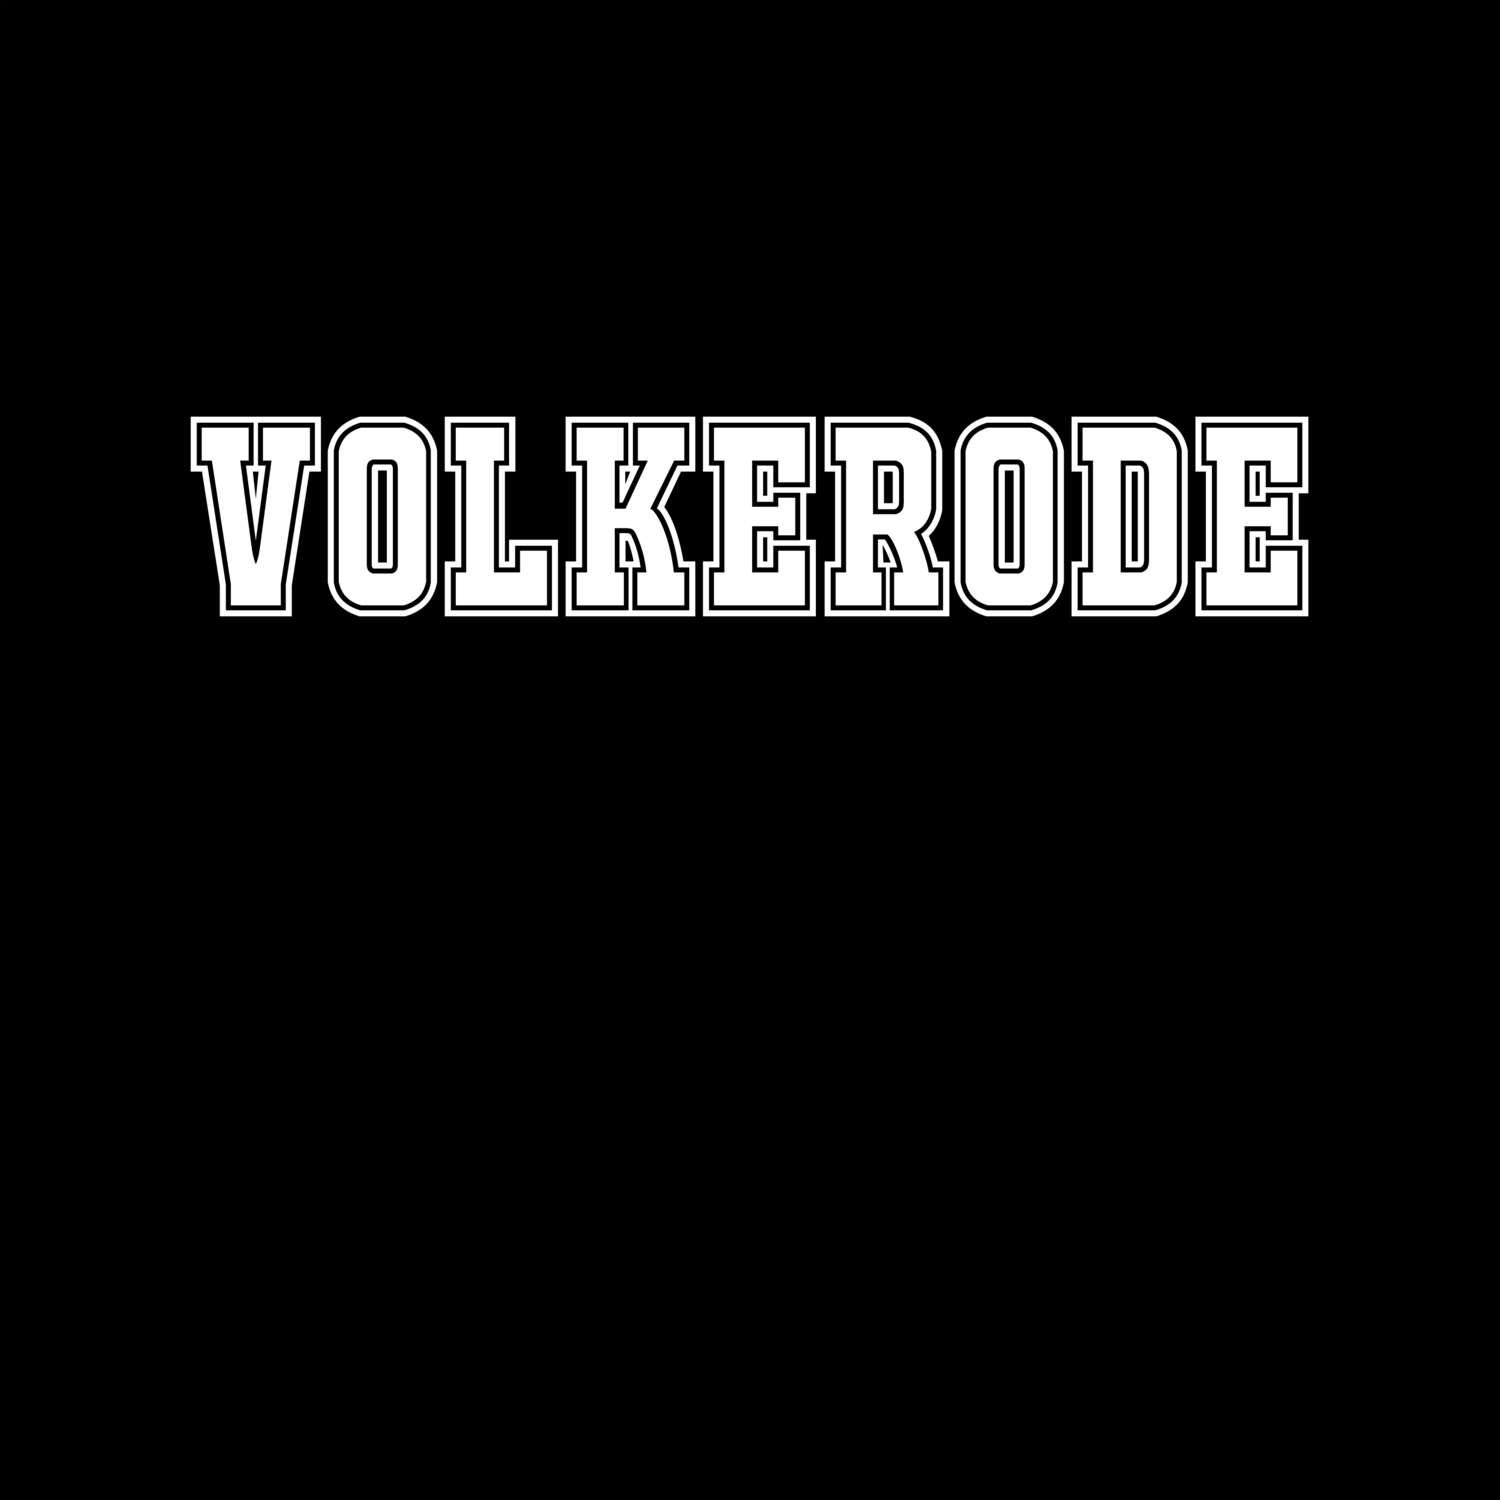 Volkerode T-Shirt »Classic«